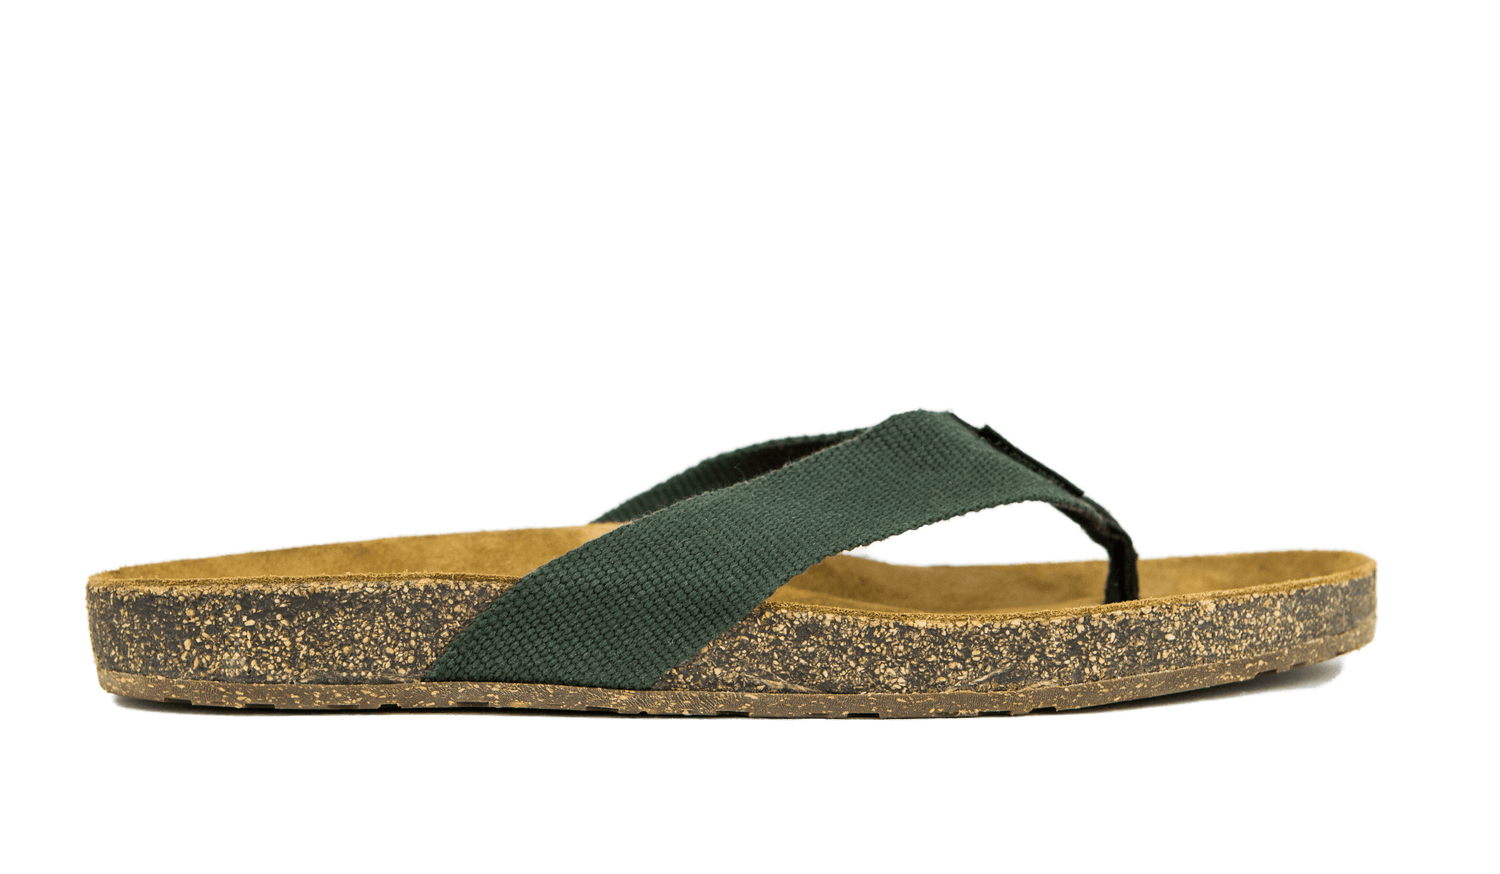 Langbrett GUR - Unisex Ecological Sandals - Cork-latex & Leather Green Shoes